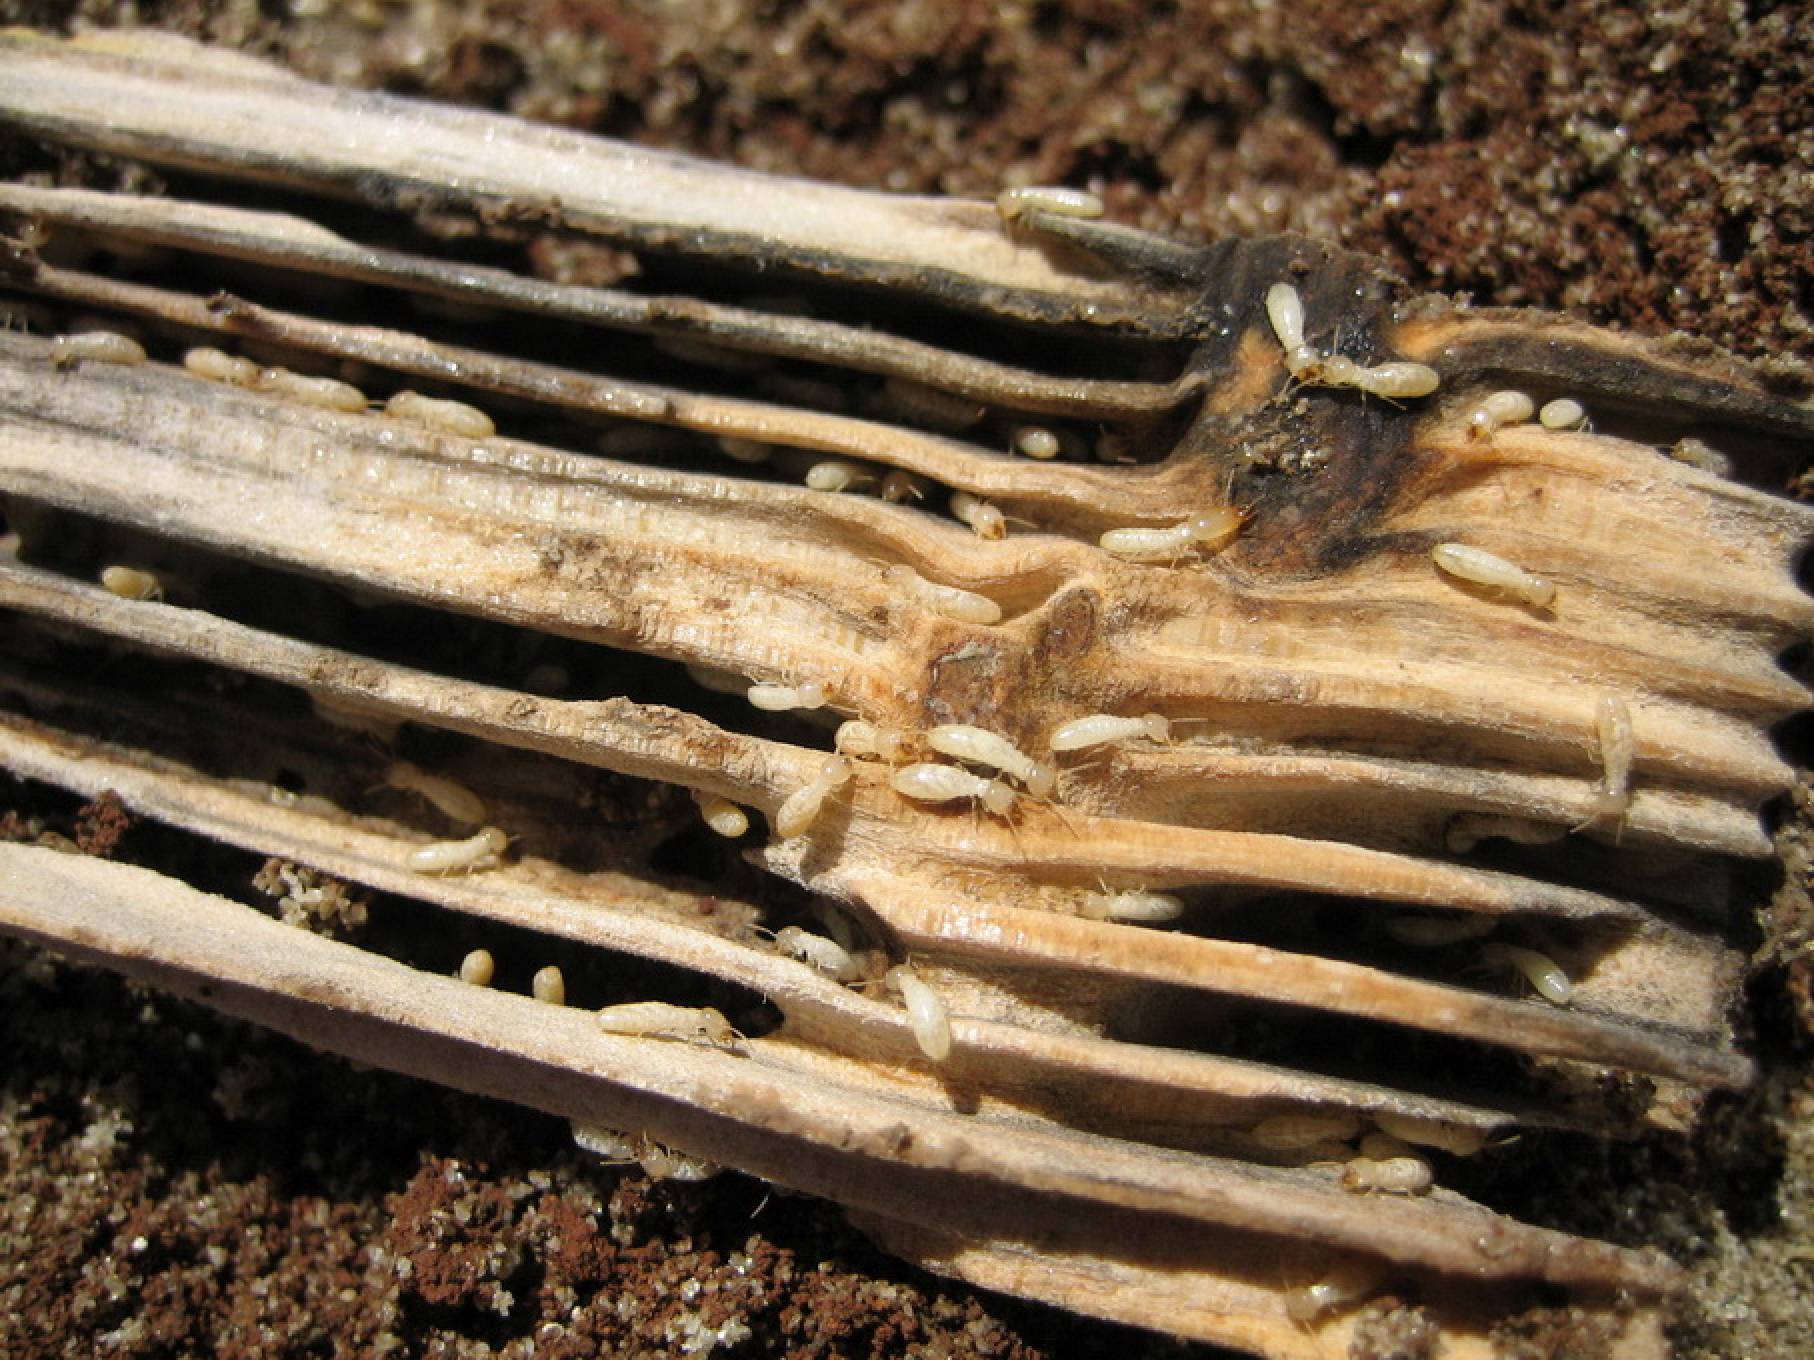 Formosan Subterranean Termite